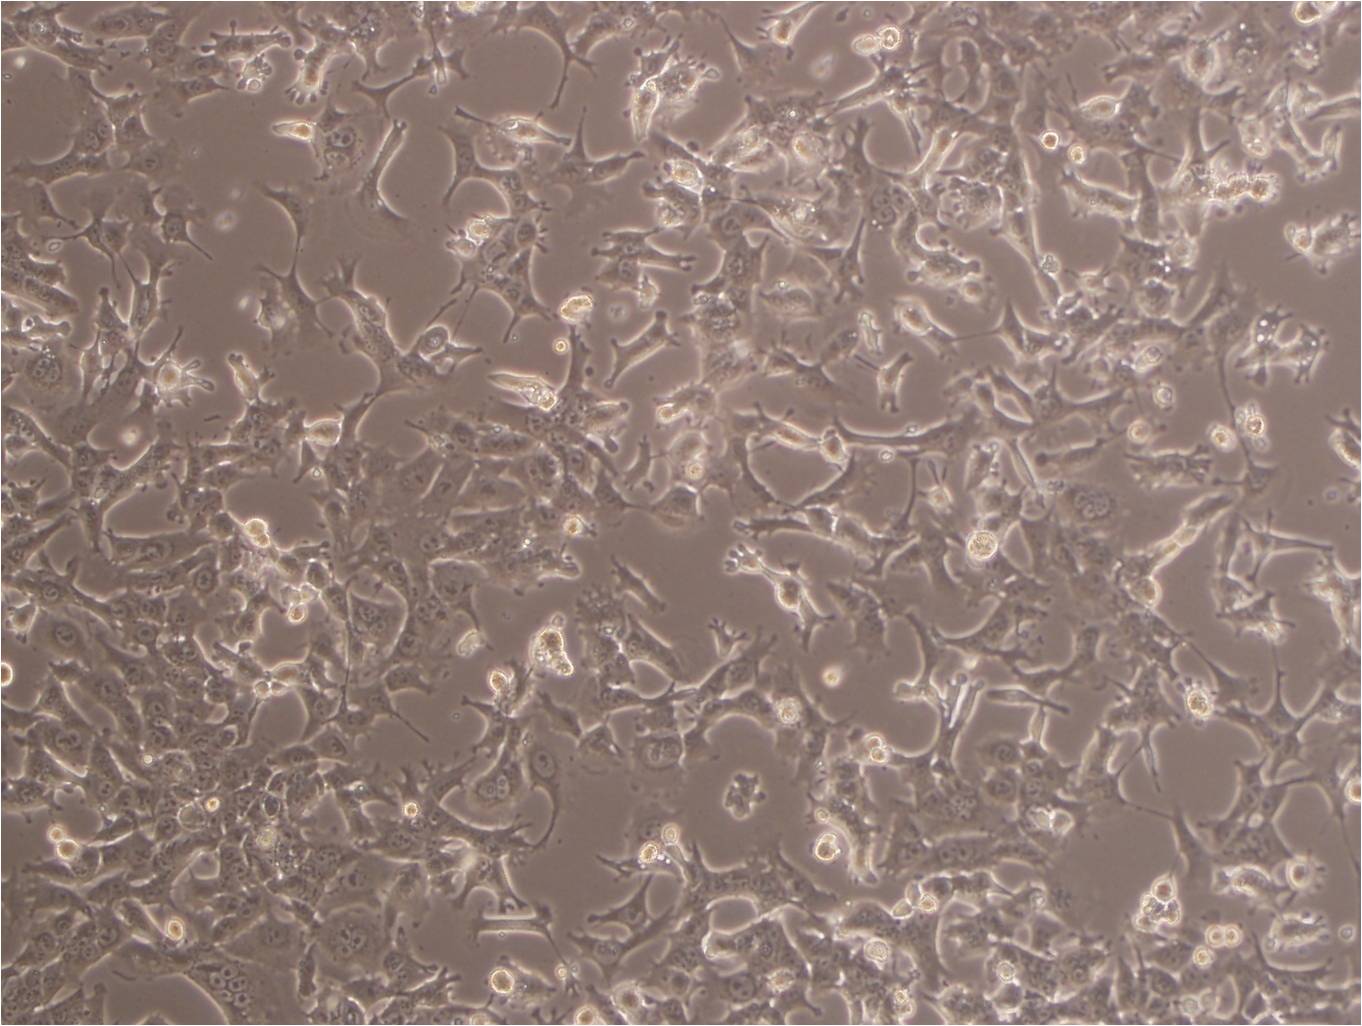 Eph4 1424 Cell|小鼠乳腺癌细胞